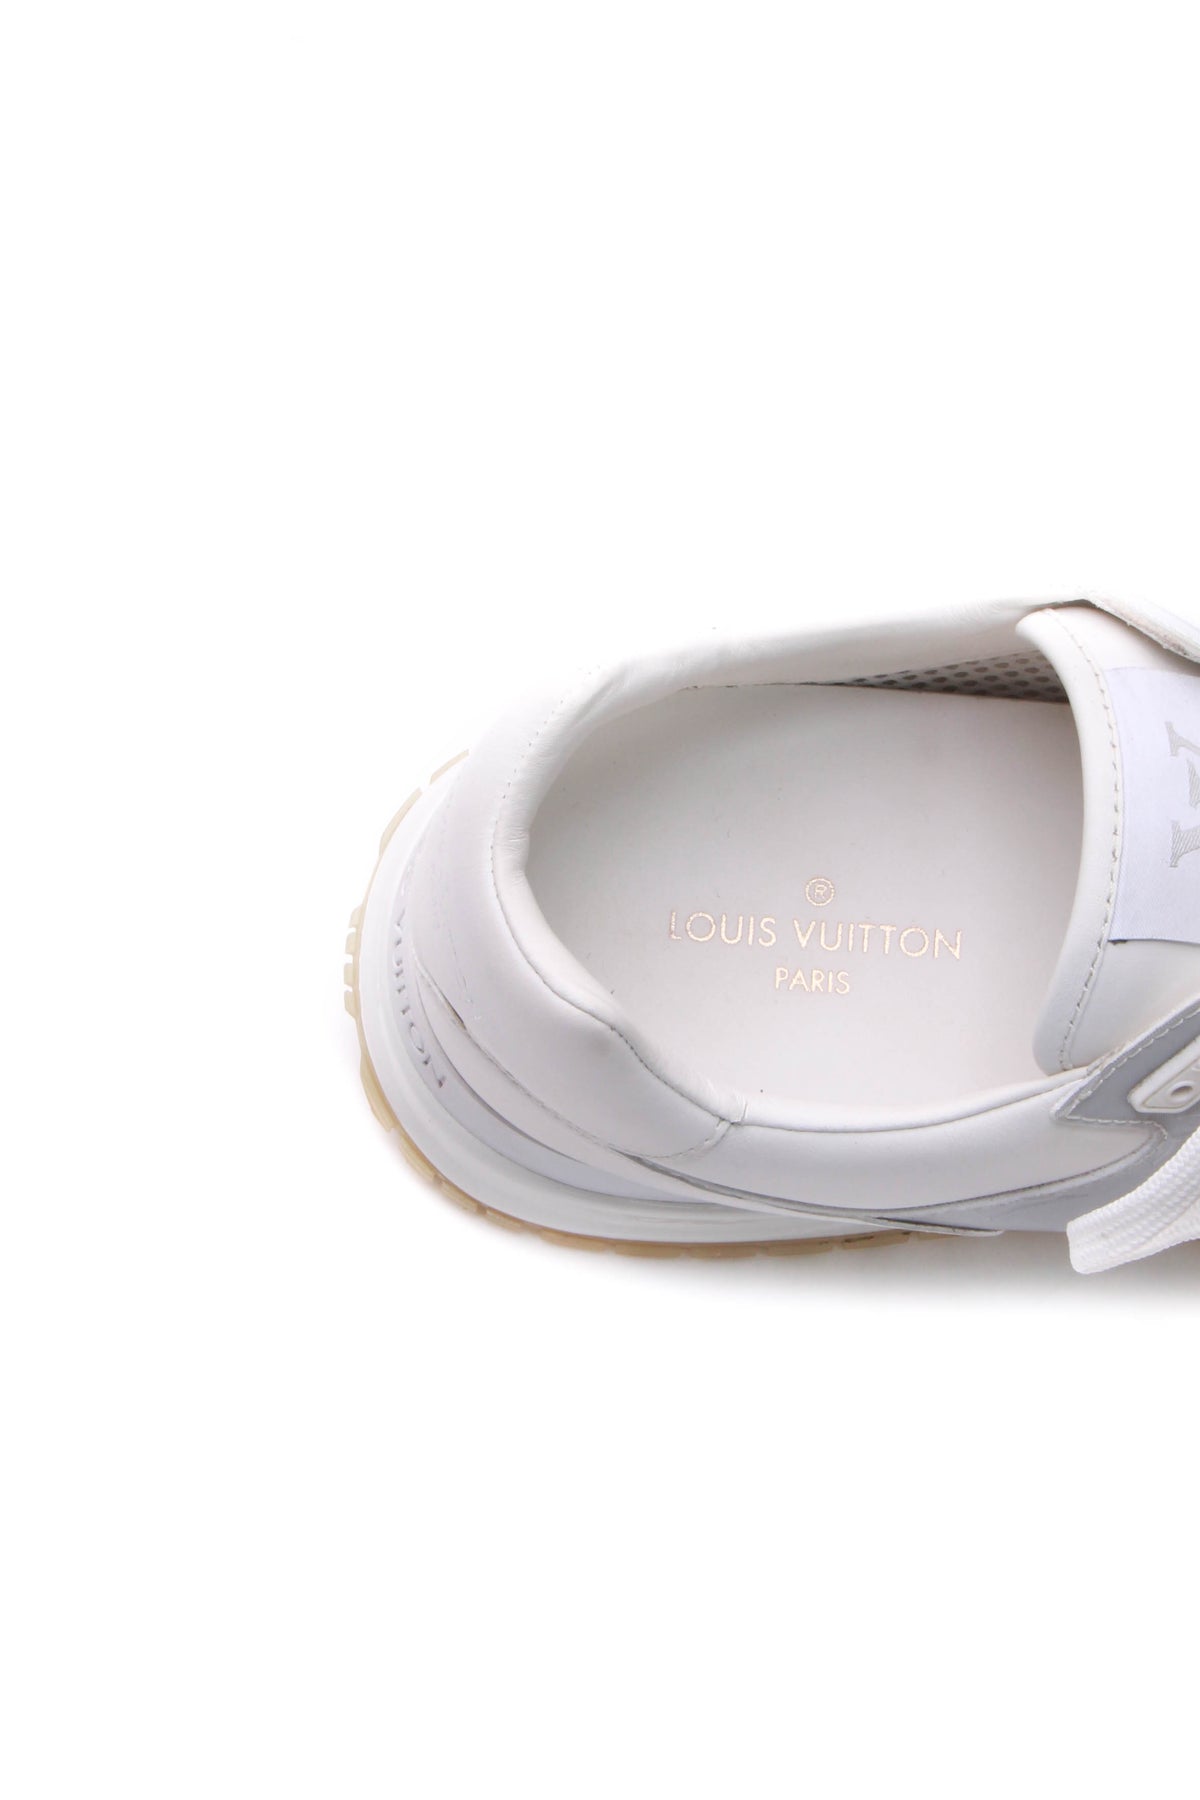 Louis Vuitton Men's Iridescent Run Away Sneakers - US Size 9